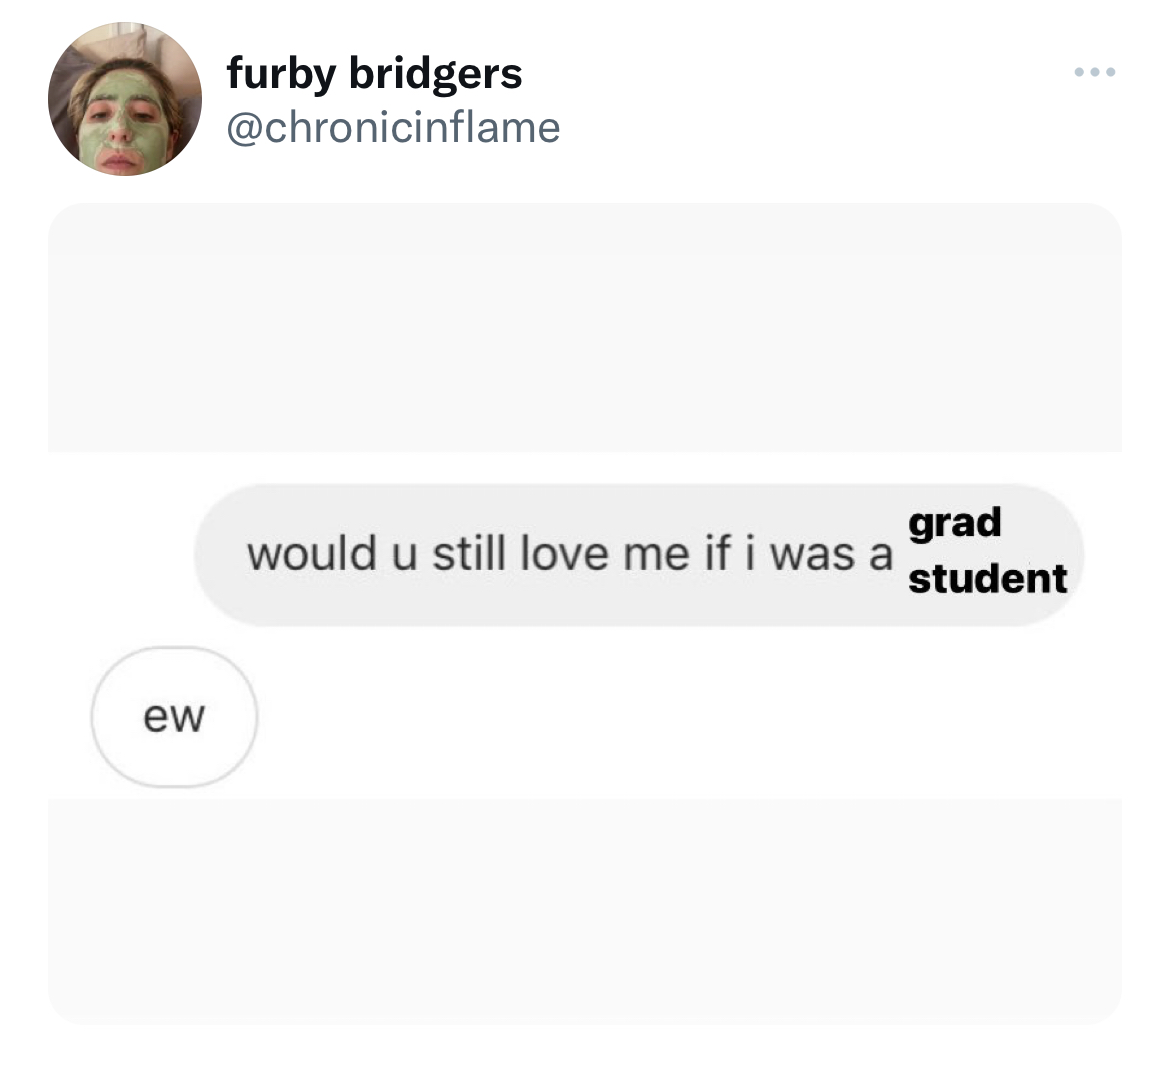 Fresh and funny tweets - communication - ew furby bridgers would u still love me if i was a grad student